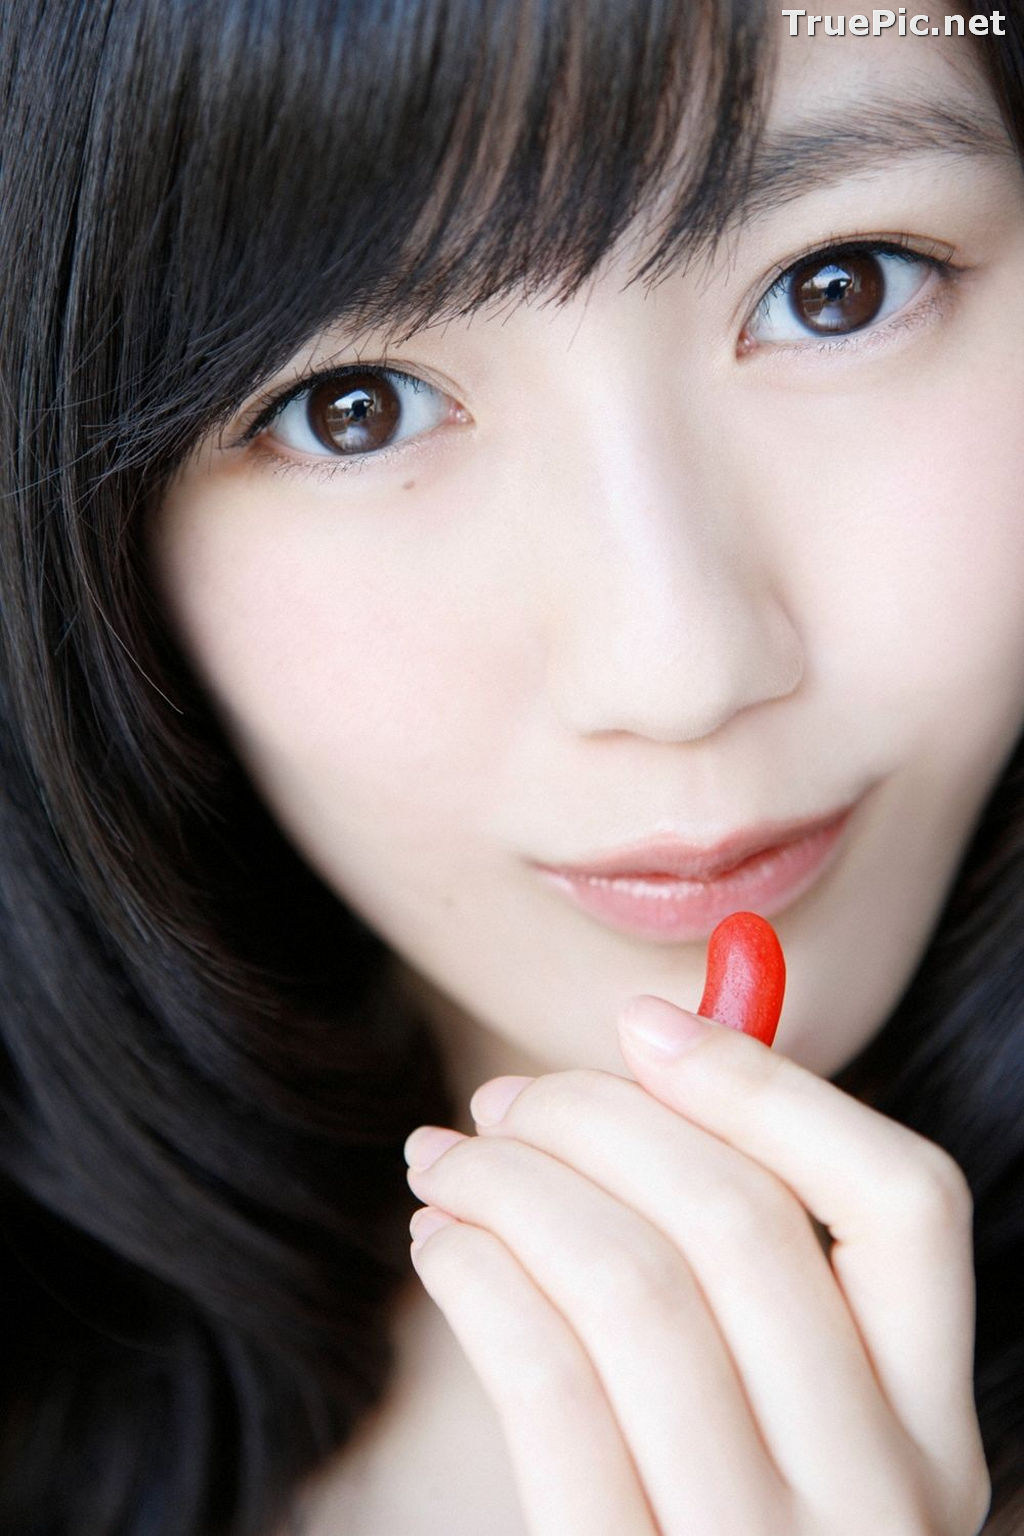 Image [YS Web] Vol.531 - Japanese Idol Girl Group (AKB48) - Mayu Watanabe - TruePic.net - Picture-16